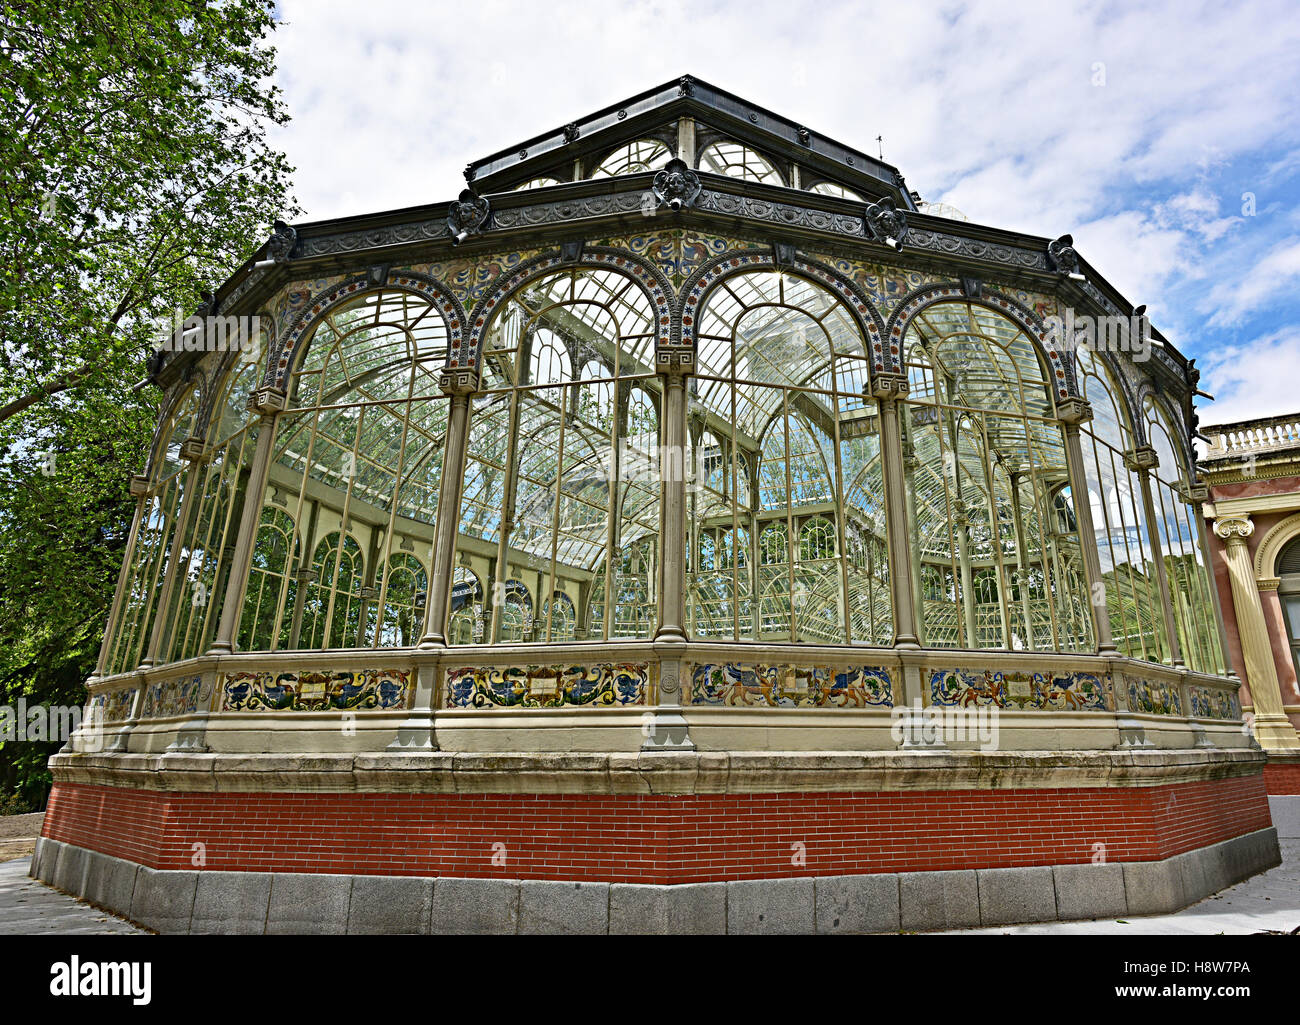 Palacio de Cristal - The Glasshouse - Retiro Park Madrid, Spain Stock Photo